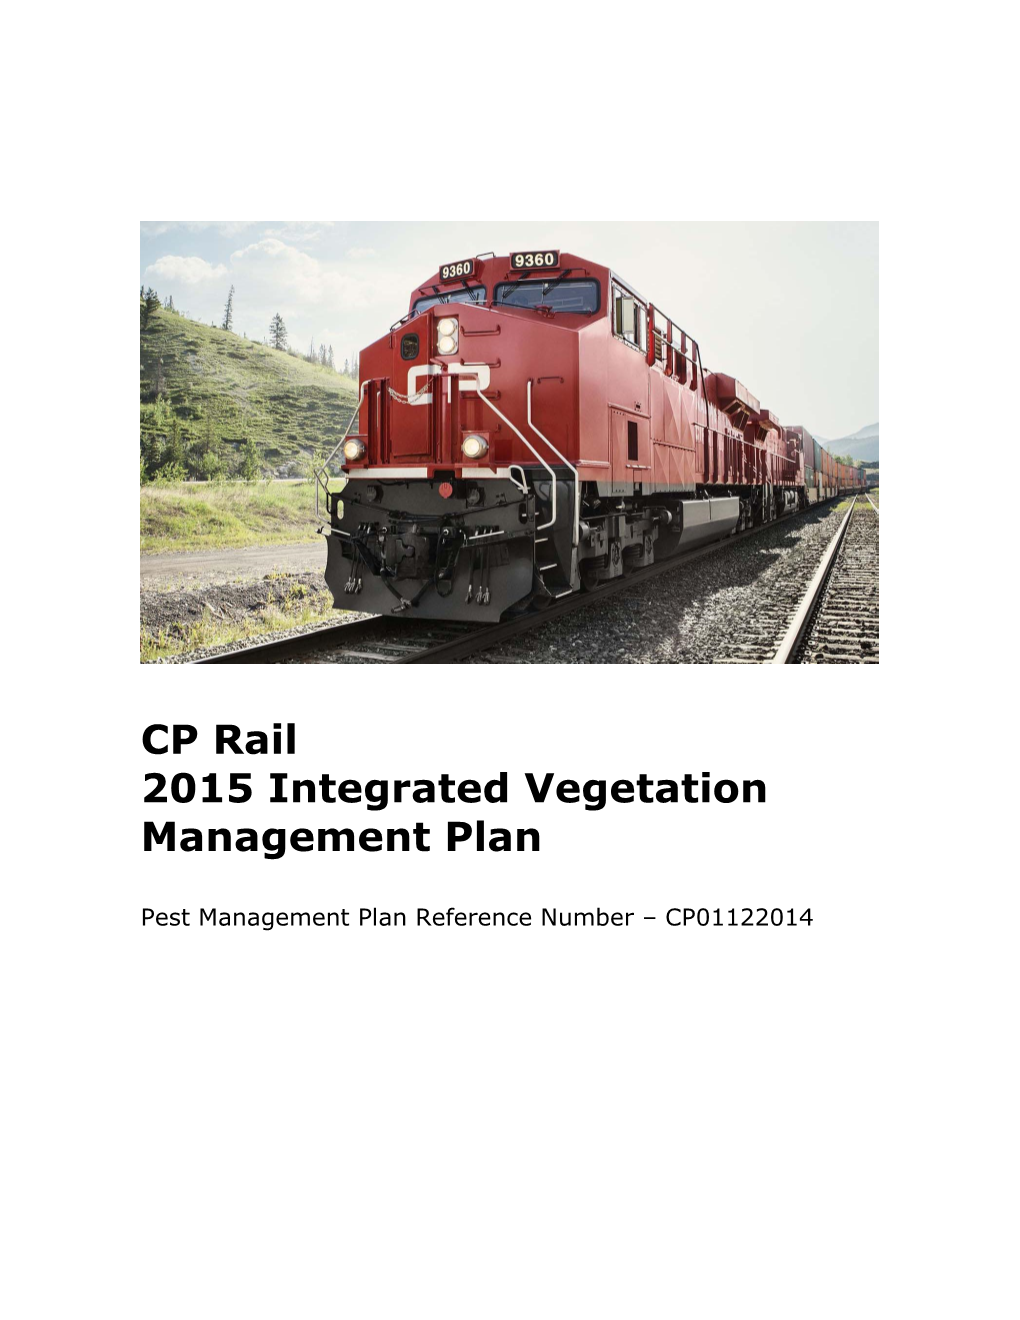 CP Rail 2015 Integrated Vegetation Management Plan